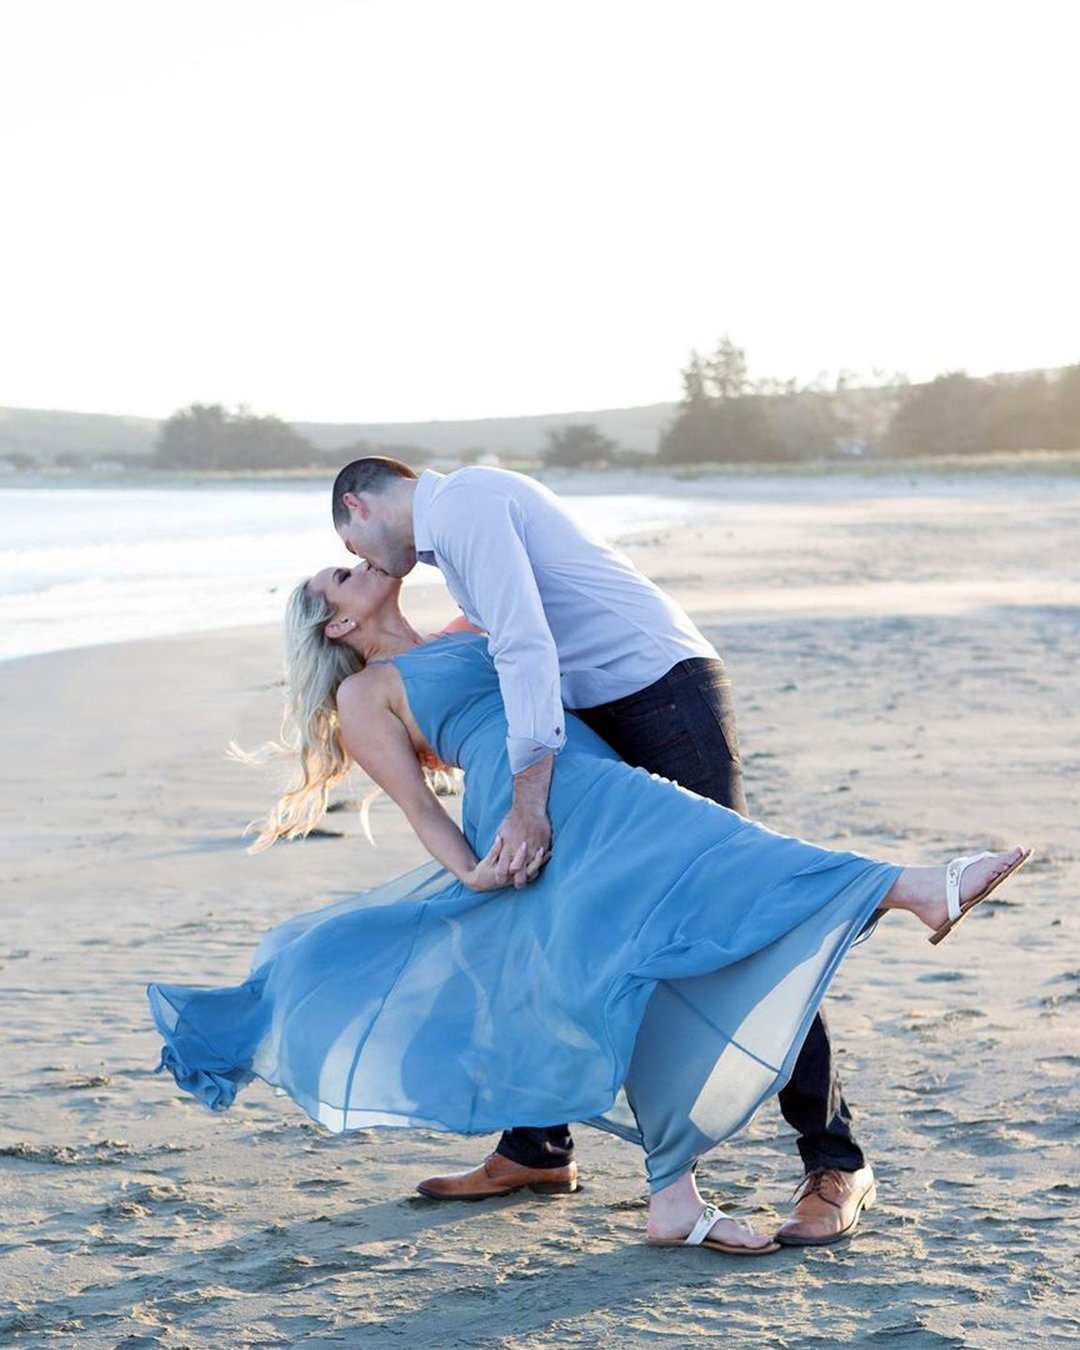 honeymoon photo ideas fun on the beach for two